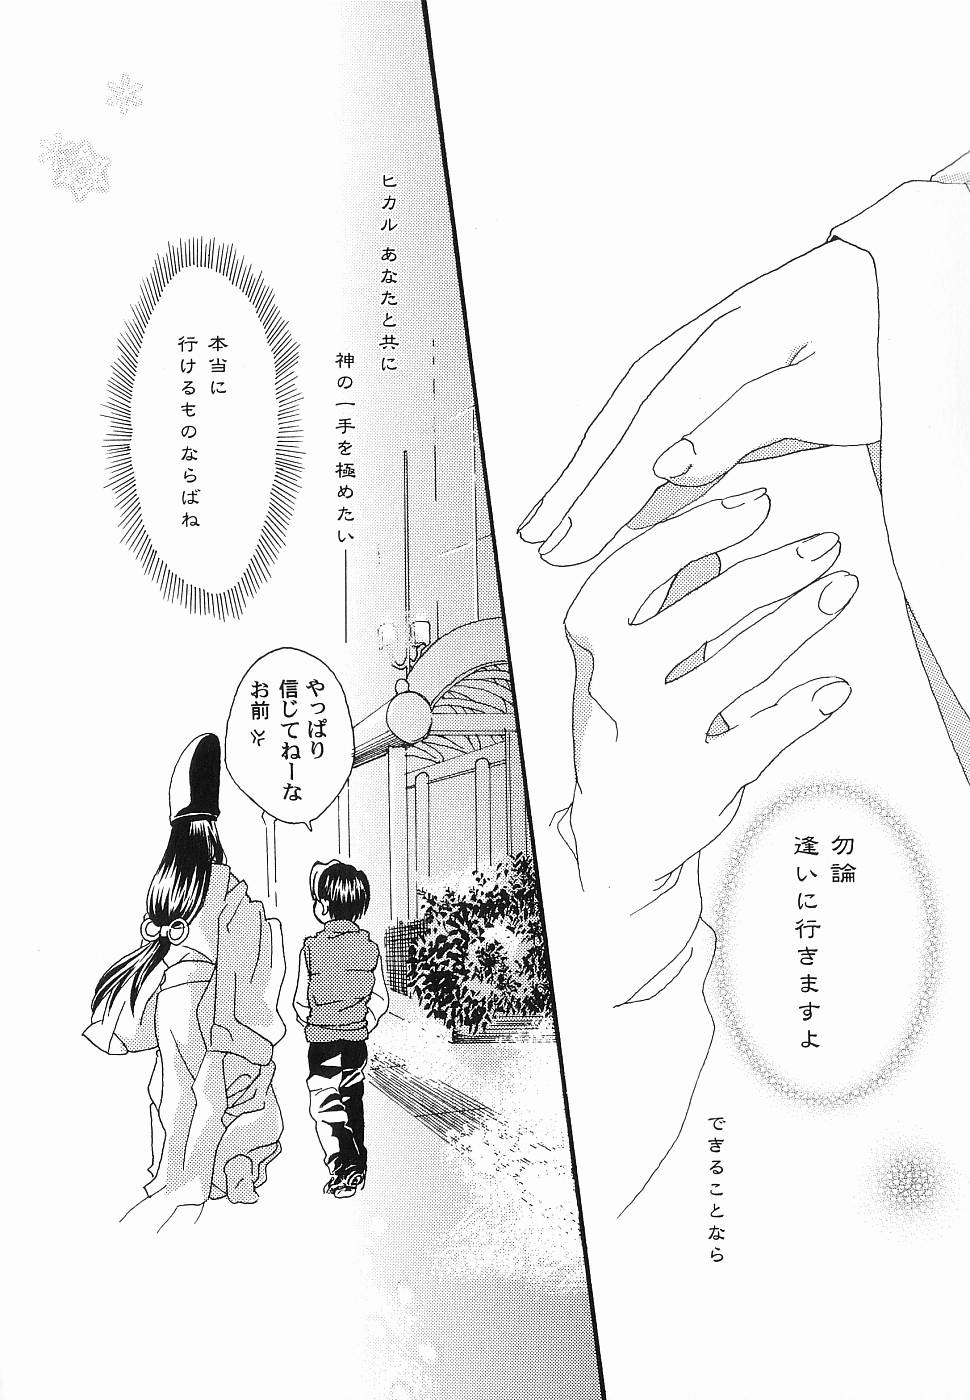 [Anthology ] God Hand ~Kami No Itte~ (Hikaru no Go) [アンソロジー]  GOD HAND ~神の一手~ (ヒカルの碁)